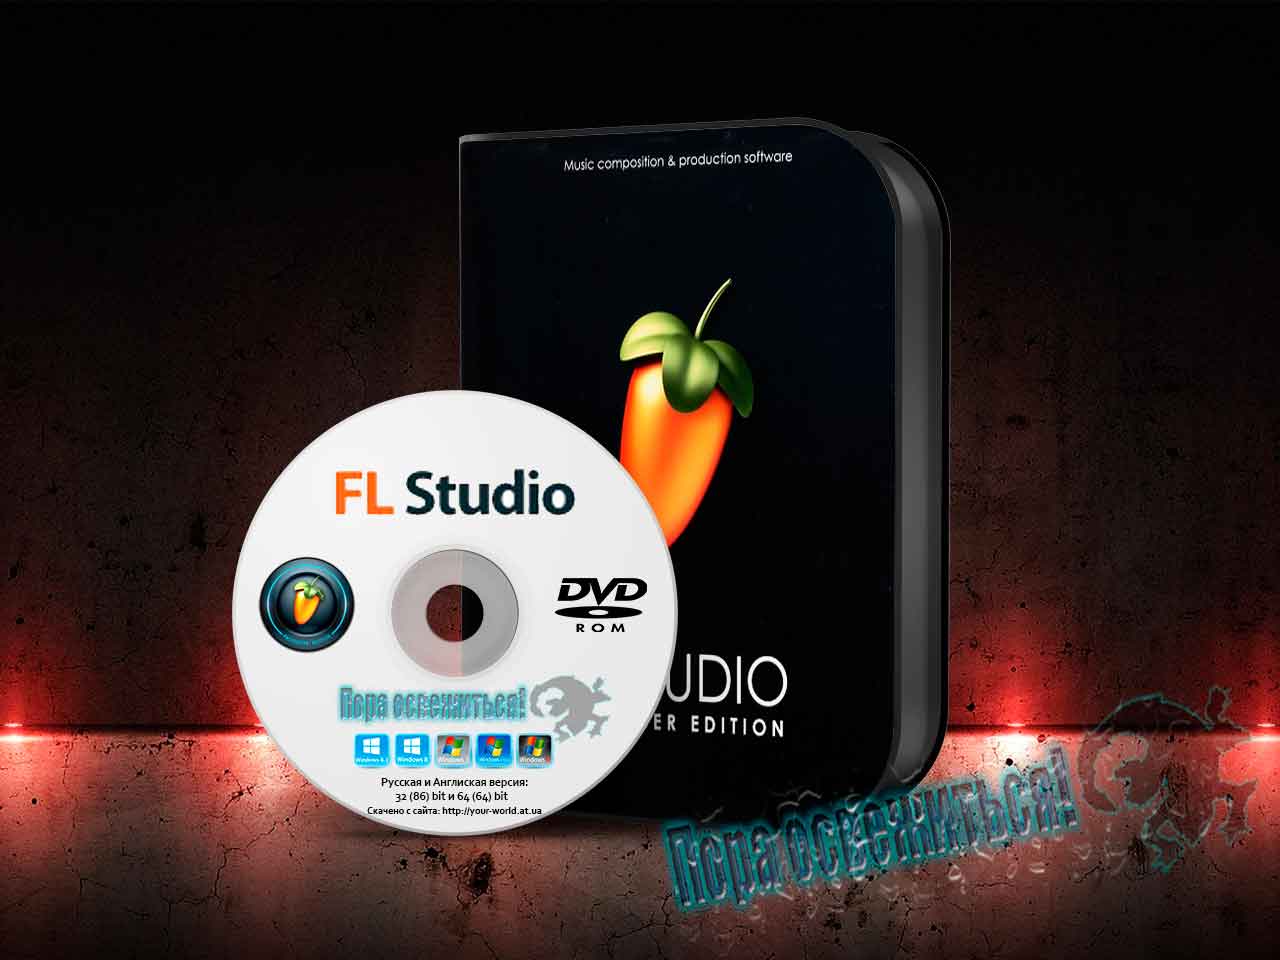 fl studio 12 producer edition shared login